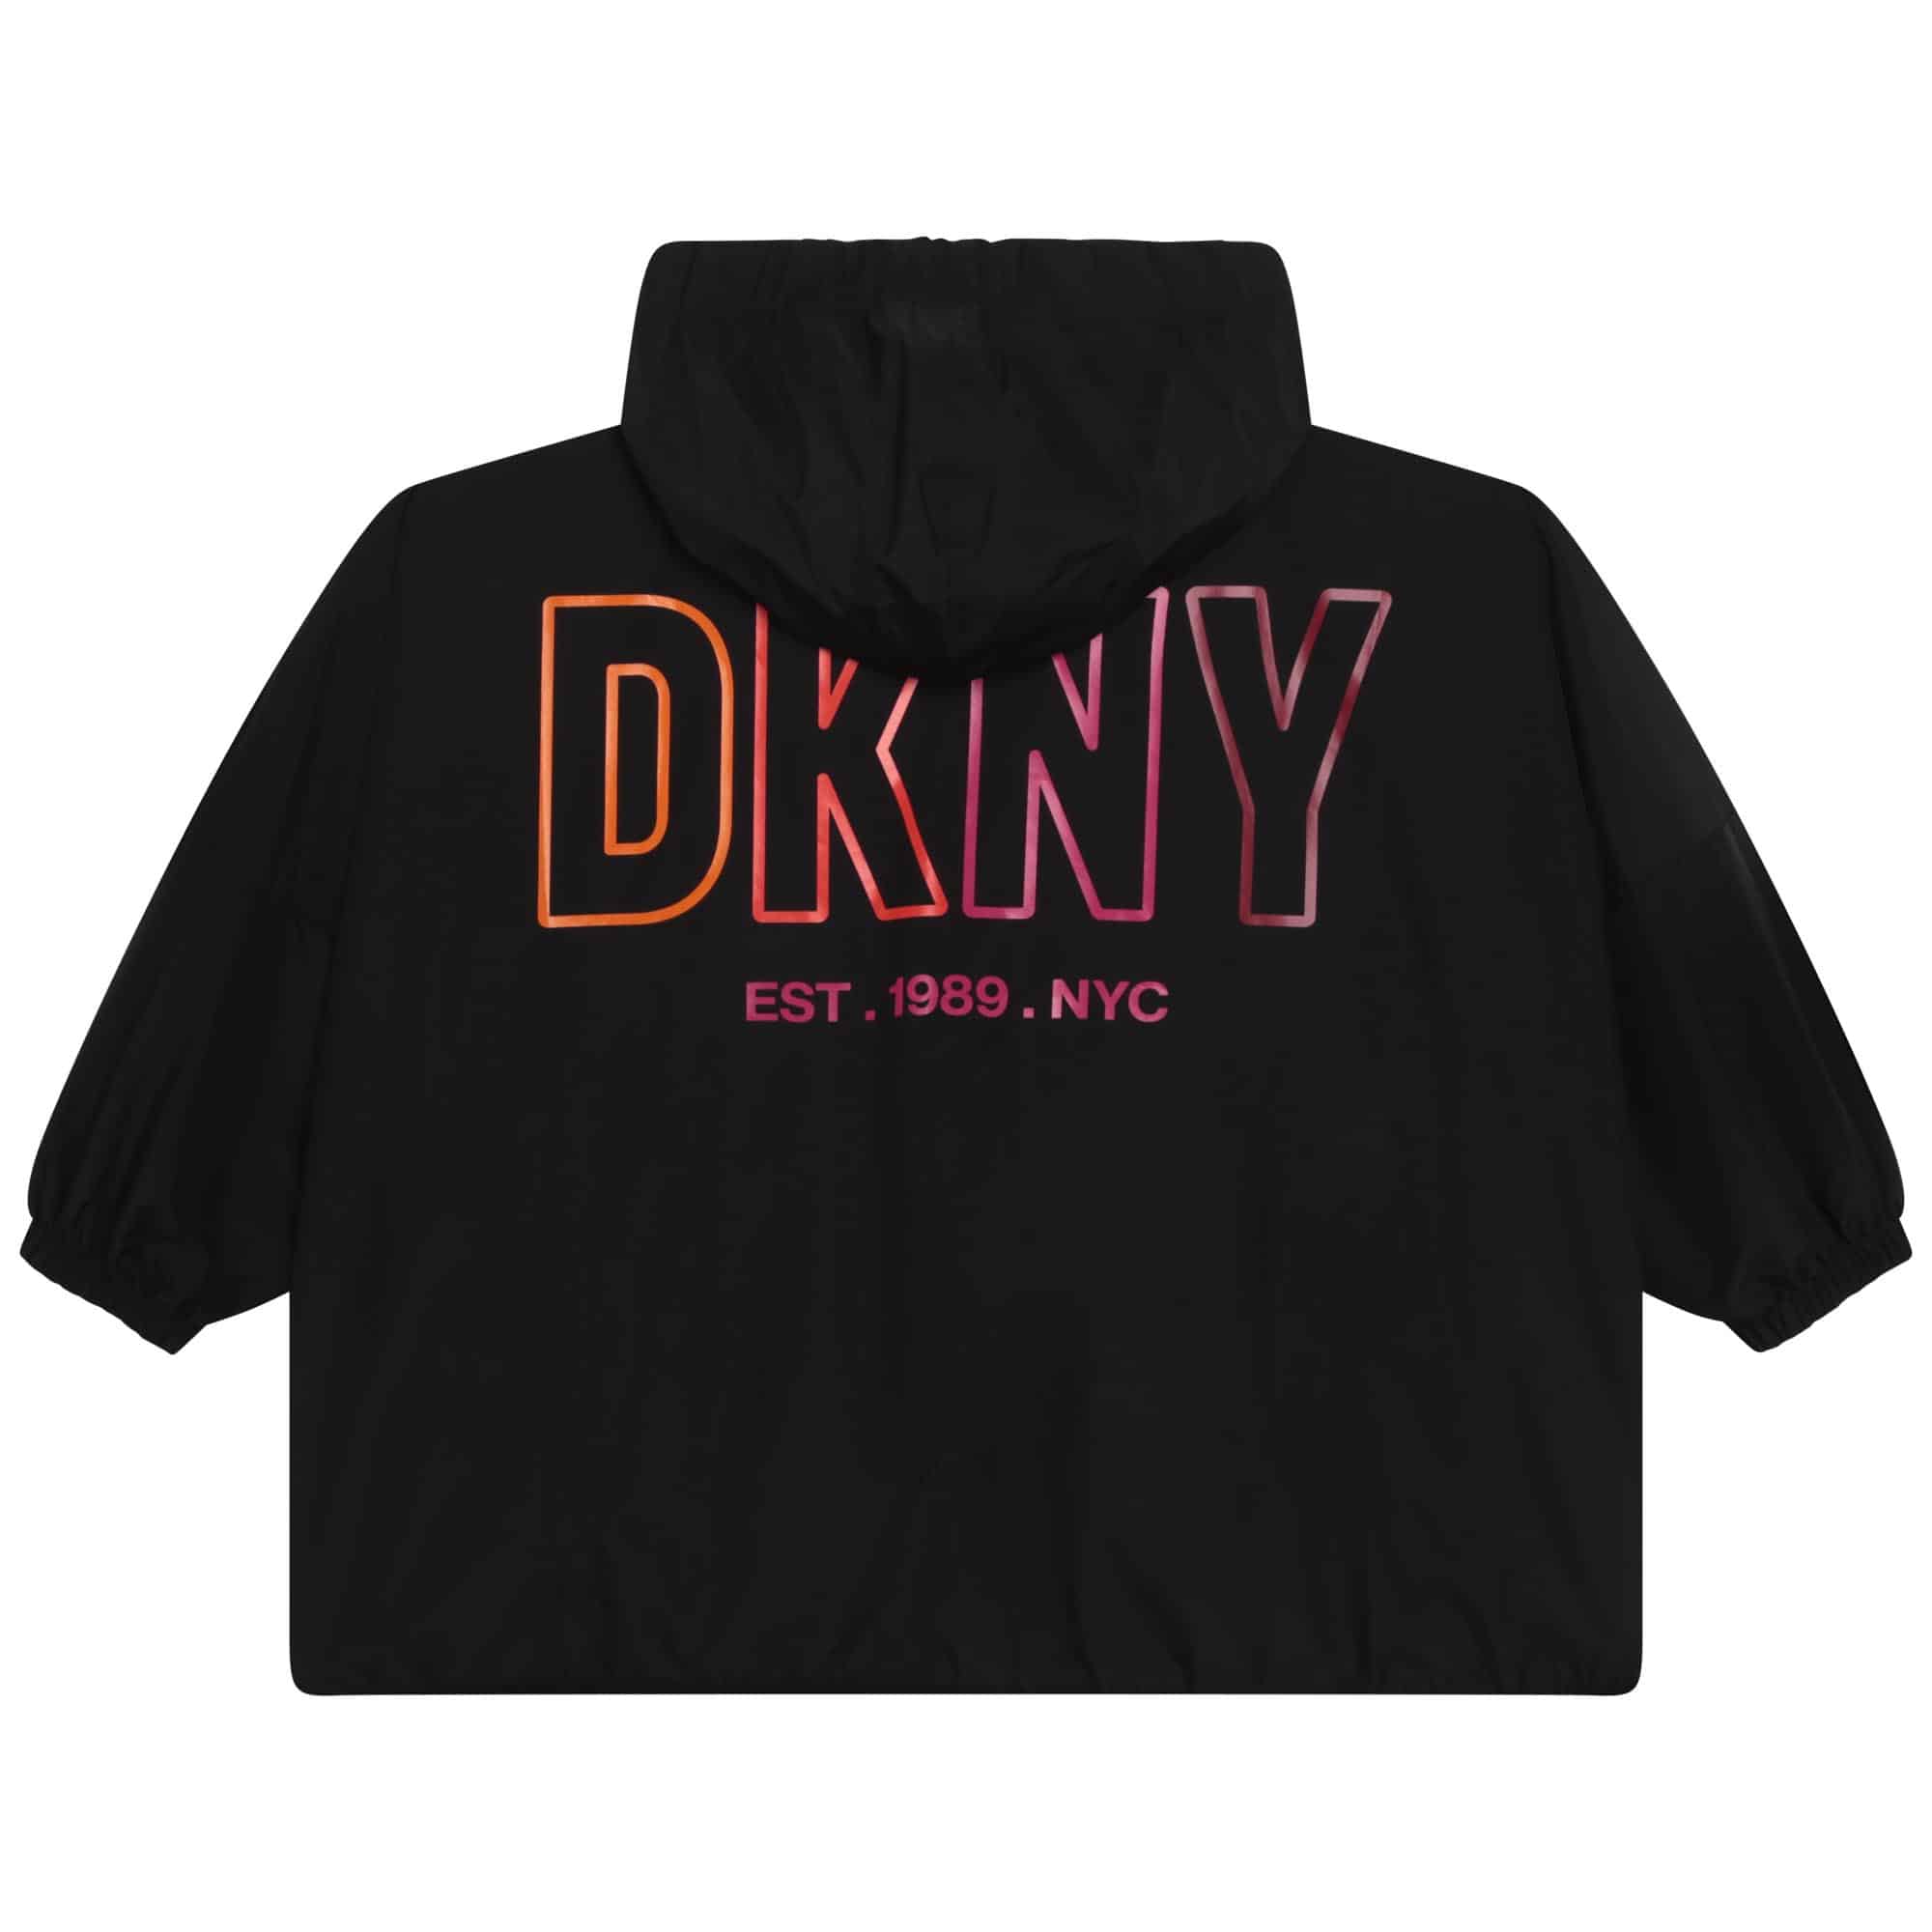 DKNY girls black hoodie with multi coloured logo